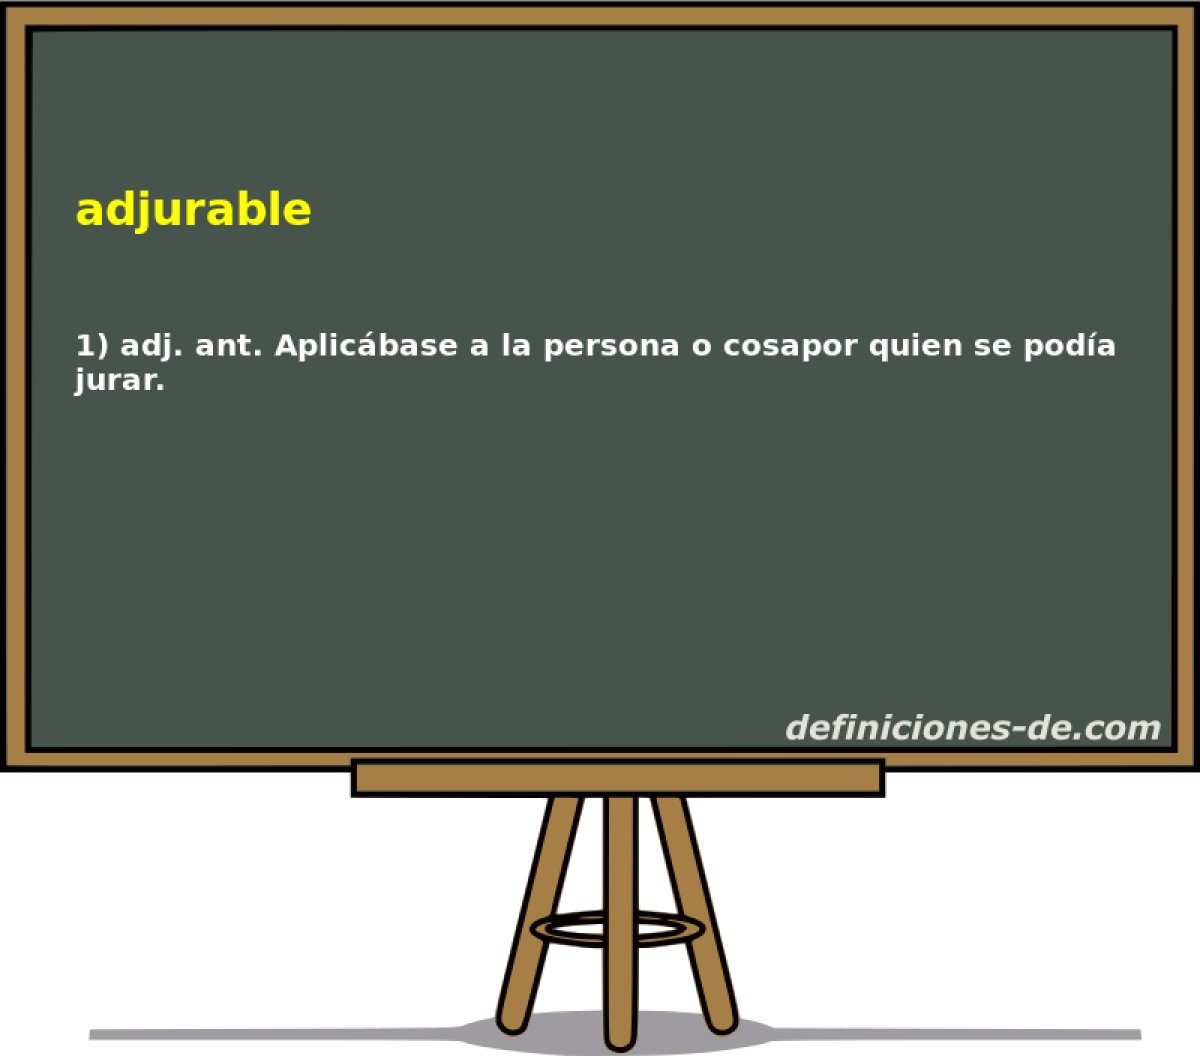 adjurable 